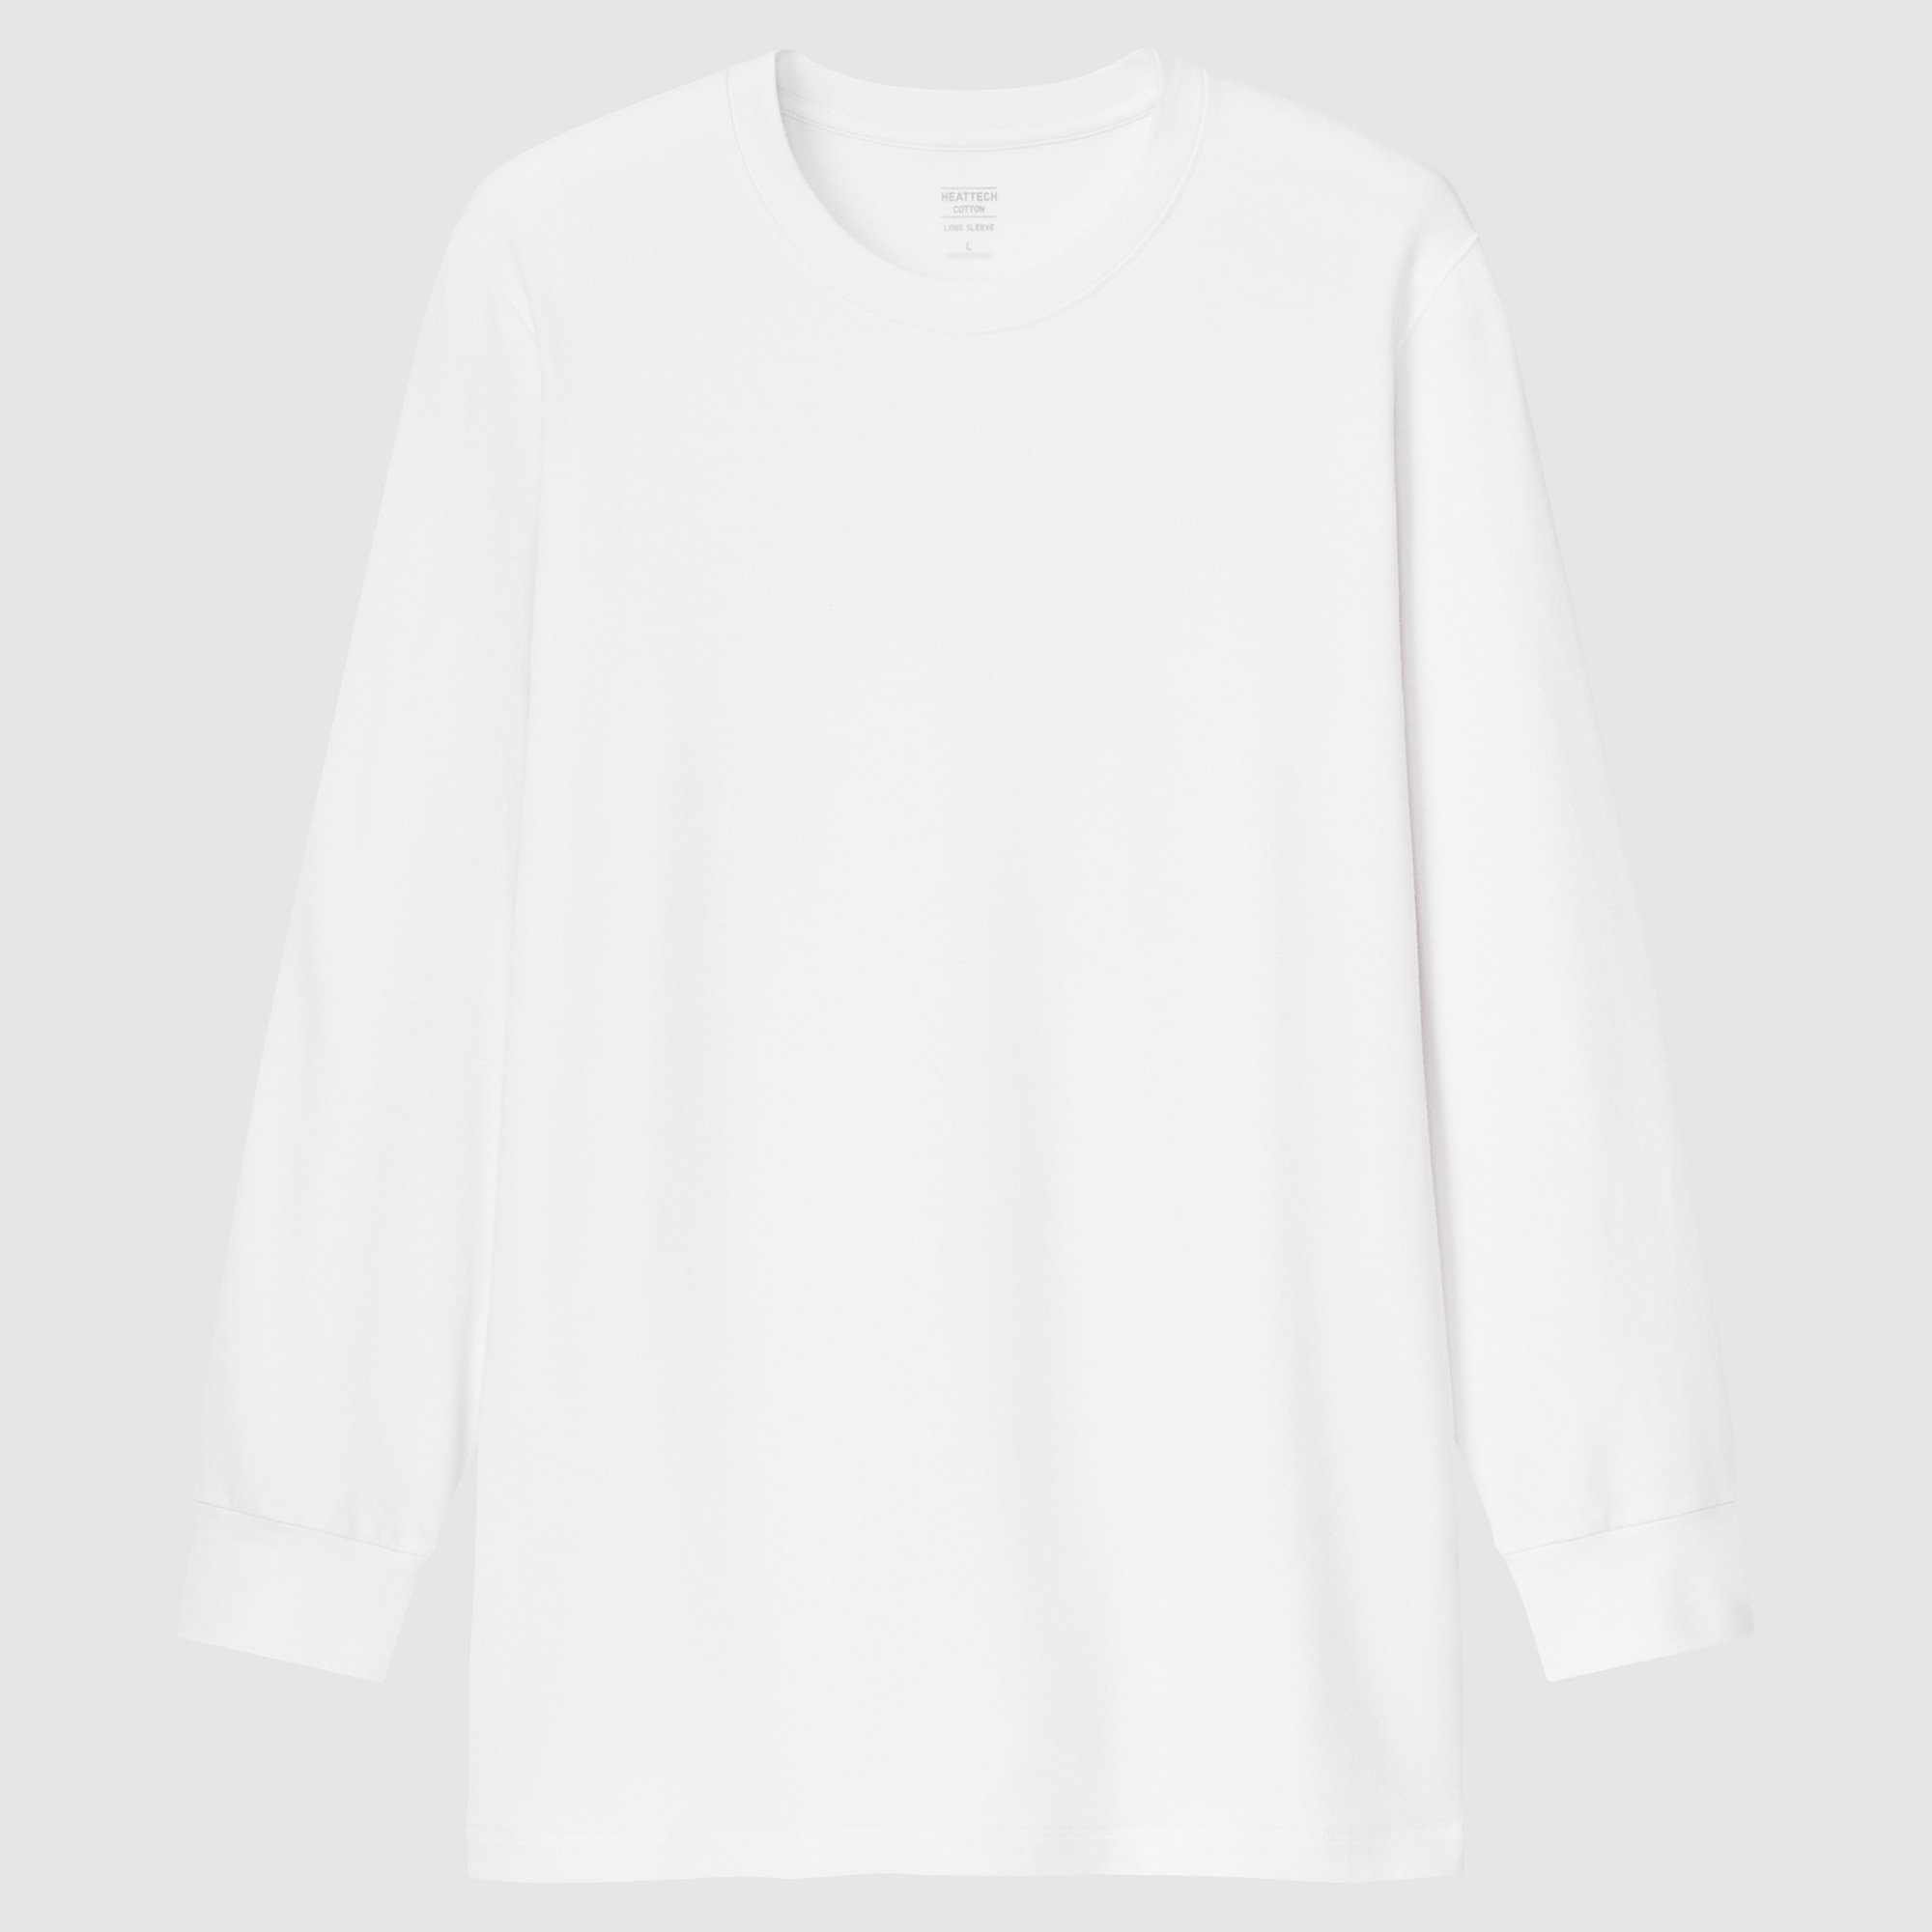 HEATTECH Cotton Crew Neck Long-Sleeve T-Shirt (Extra Warm) (2021 Edition)